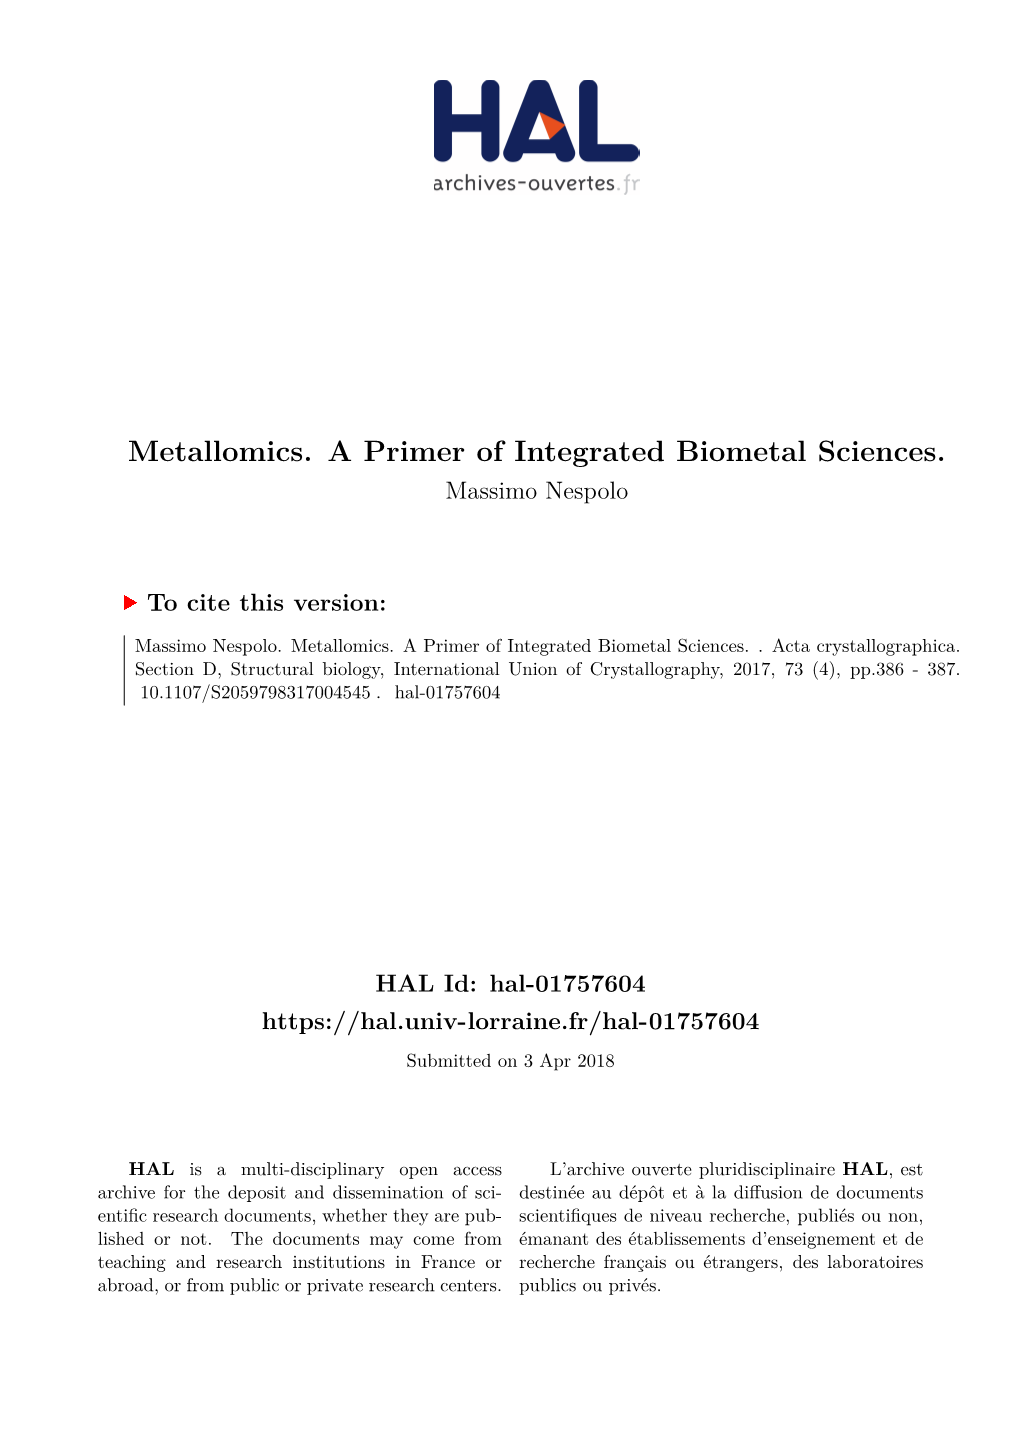 Metallomics. a Primer of Integrated Biometal Sciences. Massimo Nespolo